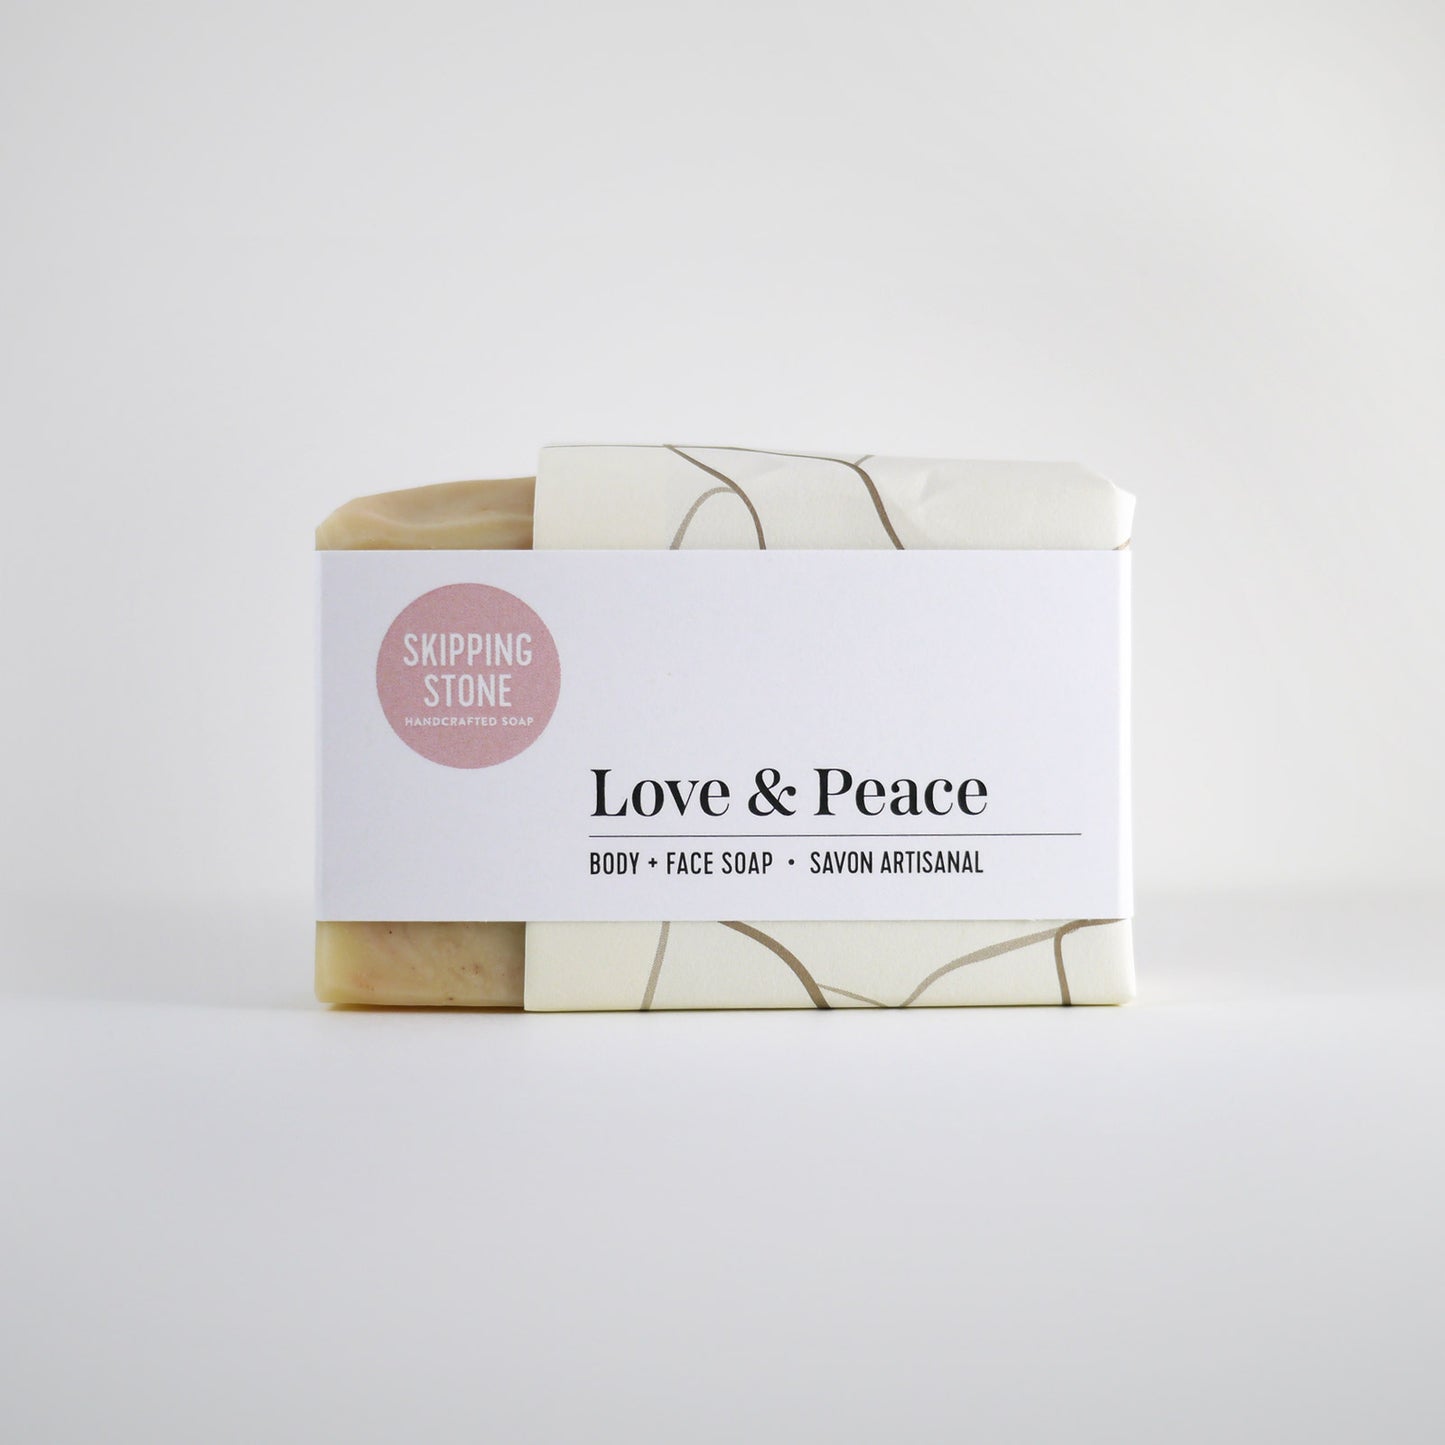 Love & Peace : Body + Face Soap